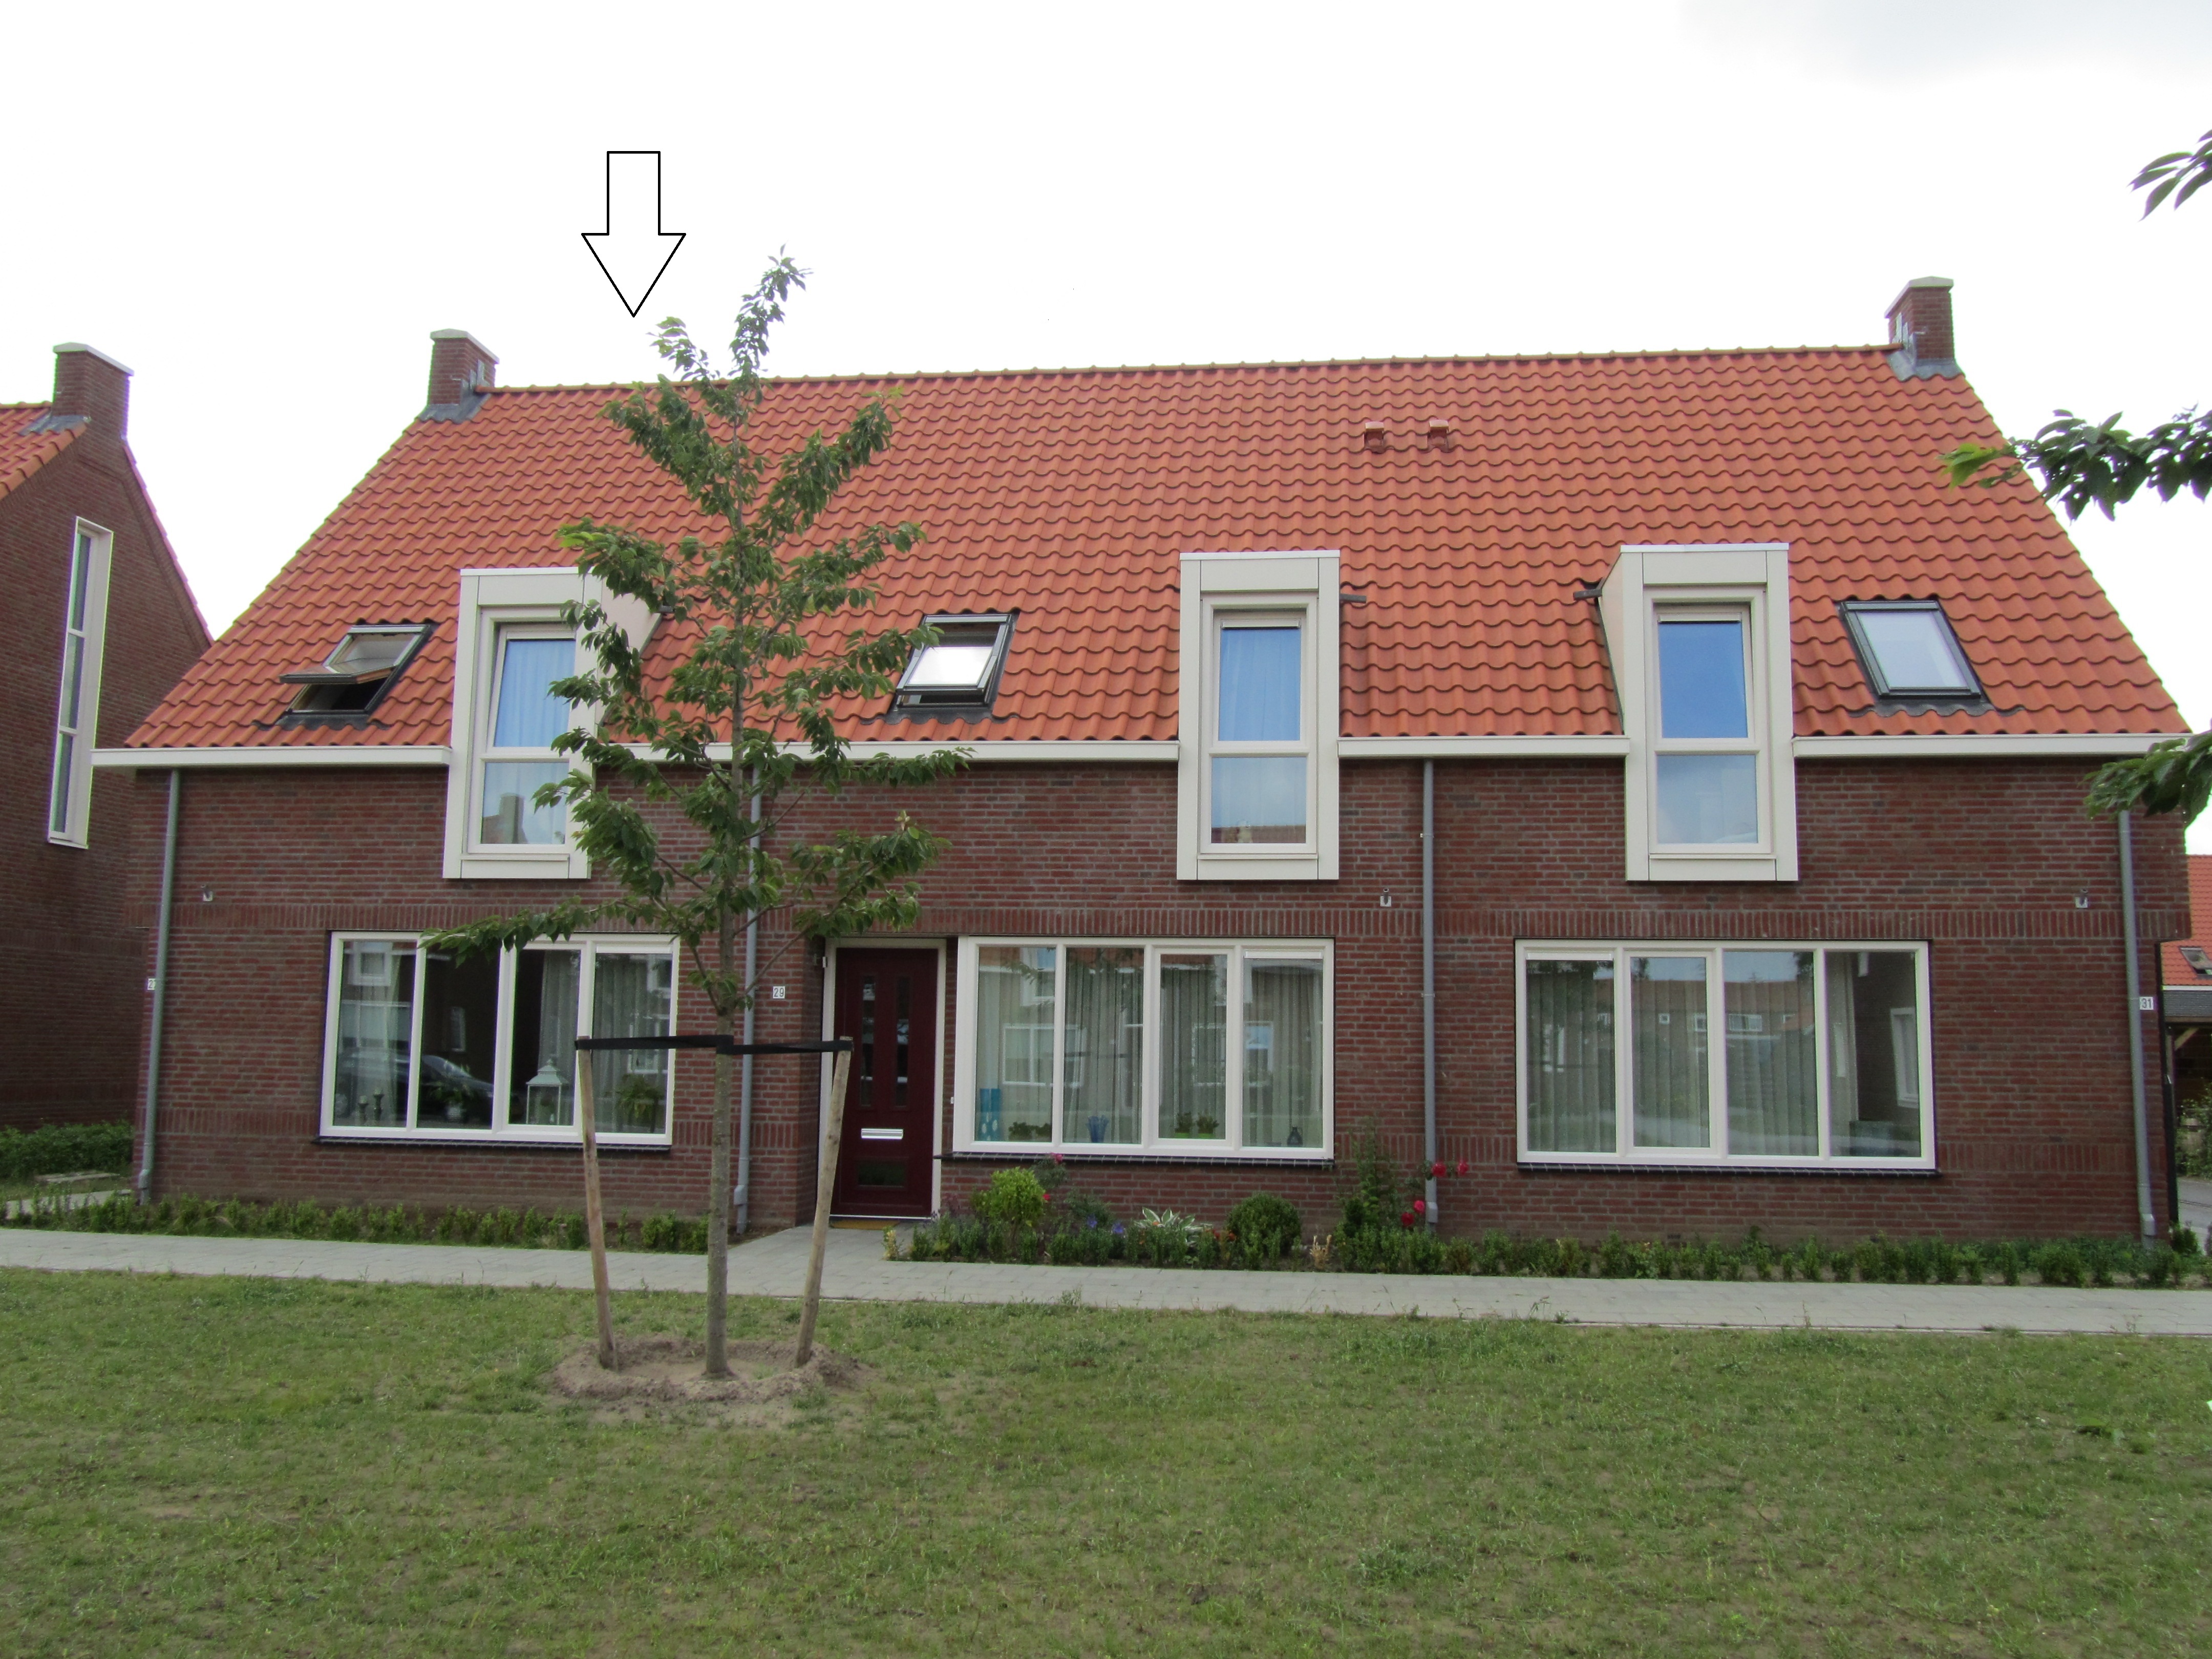 Prinses Beatrixstraat 27, 7271 GG Borculo, Nederland